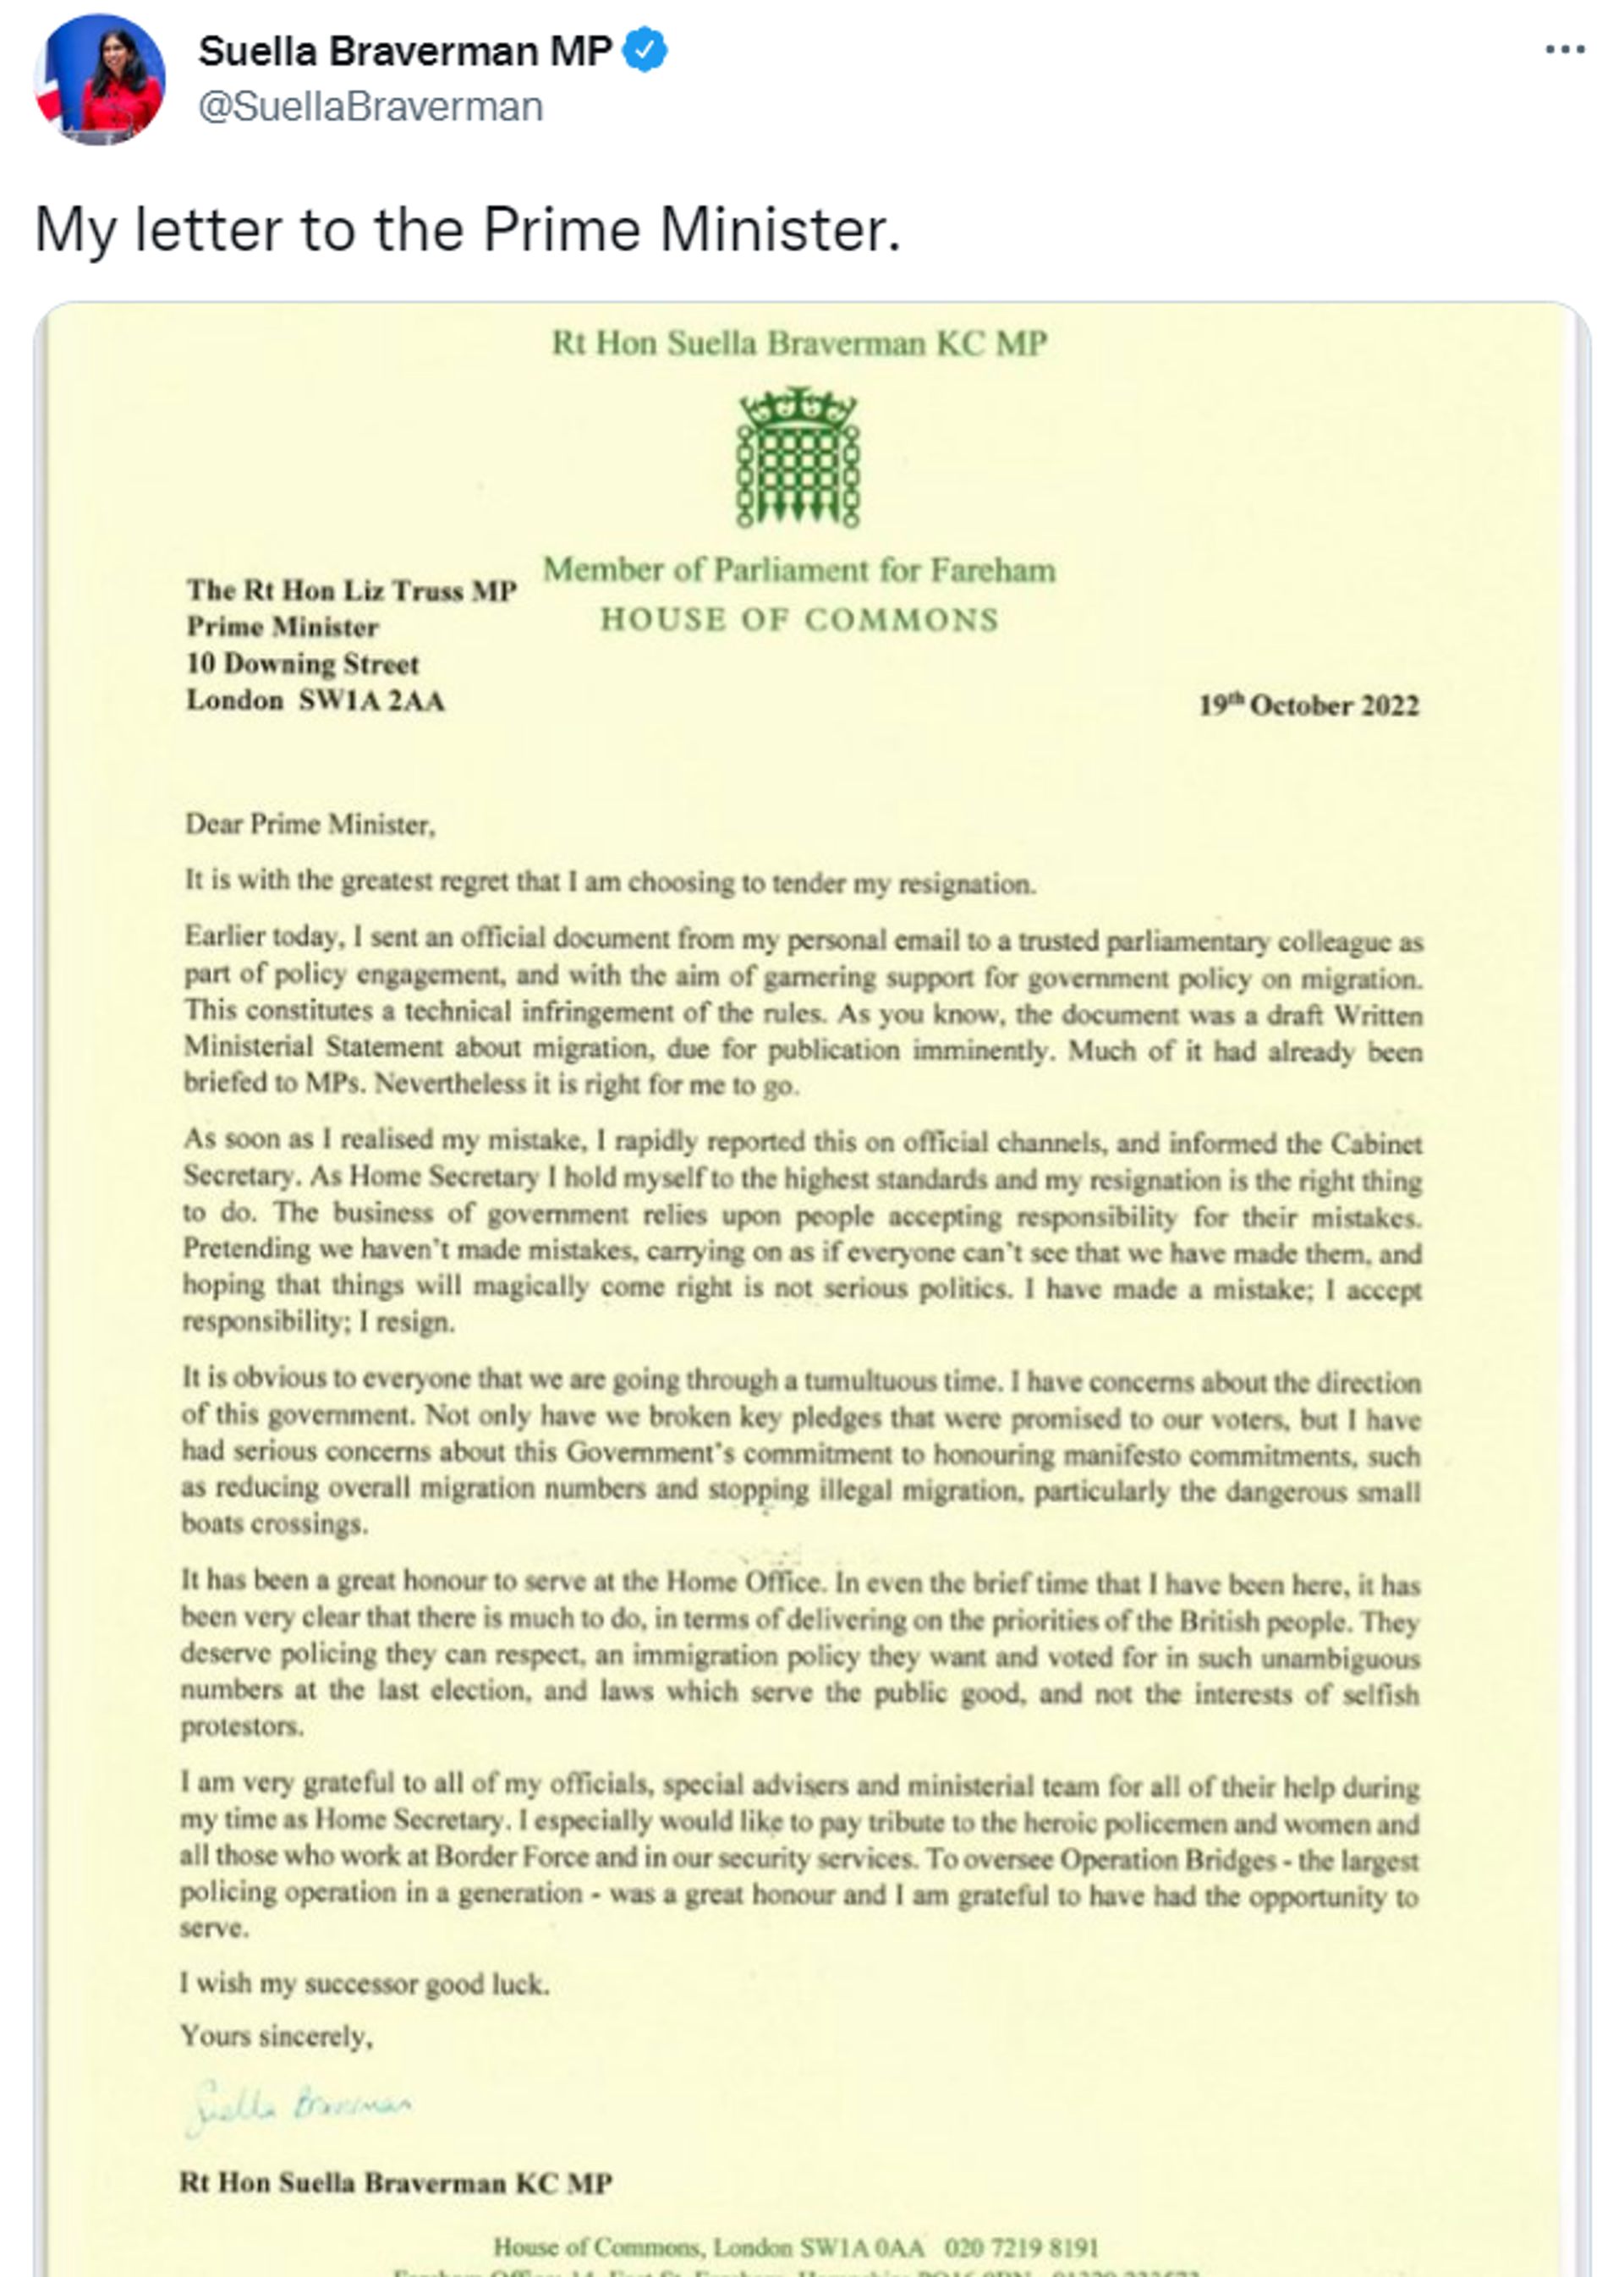 British MP Suella Braverman tweets her letter of resignation as Home Secretary to Prime Minister Liz Truss - Sputnik International, 1920, 19.10.2022